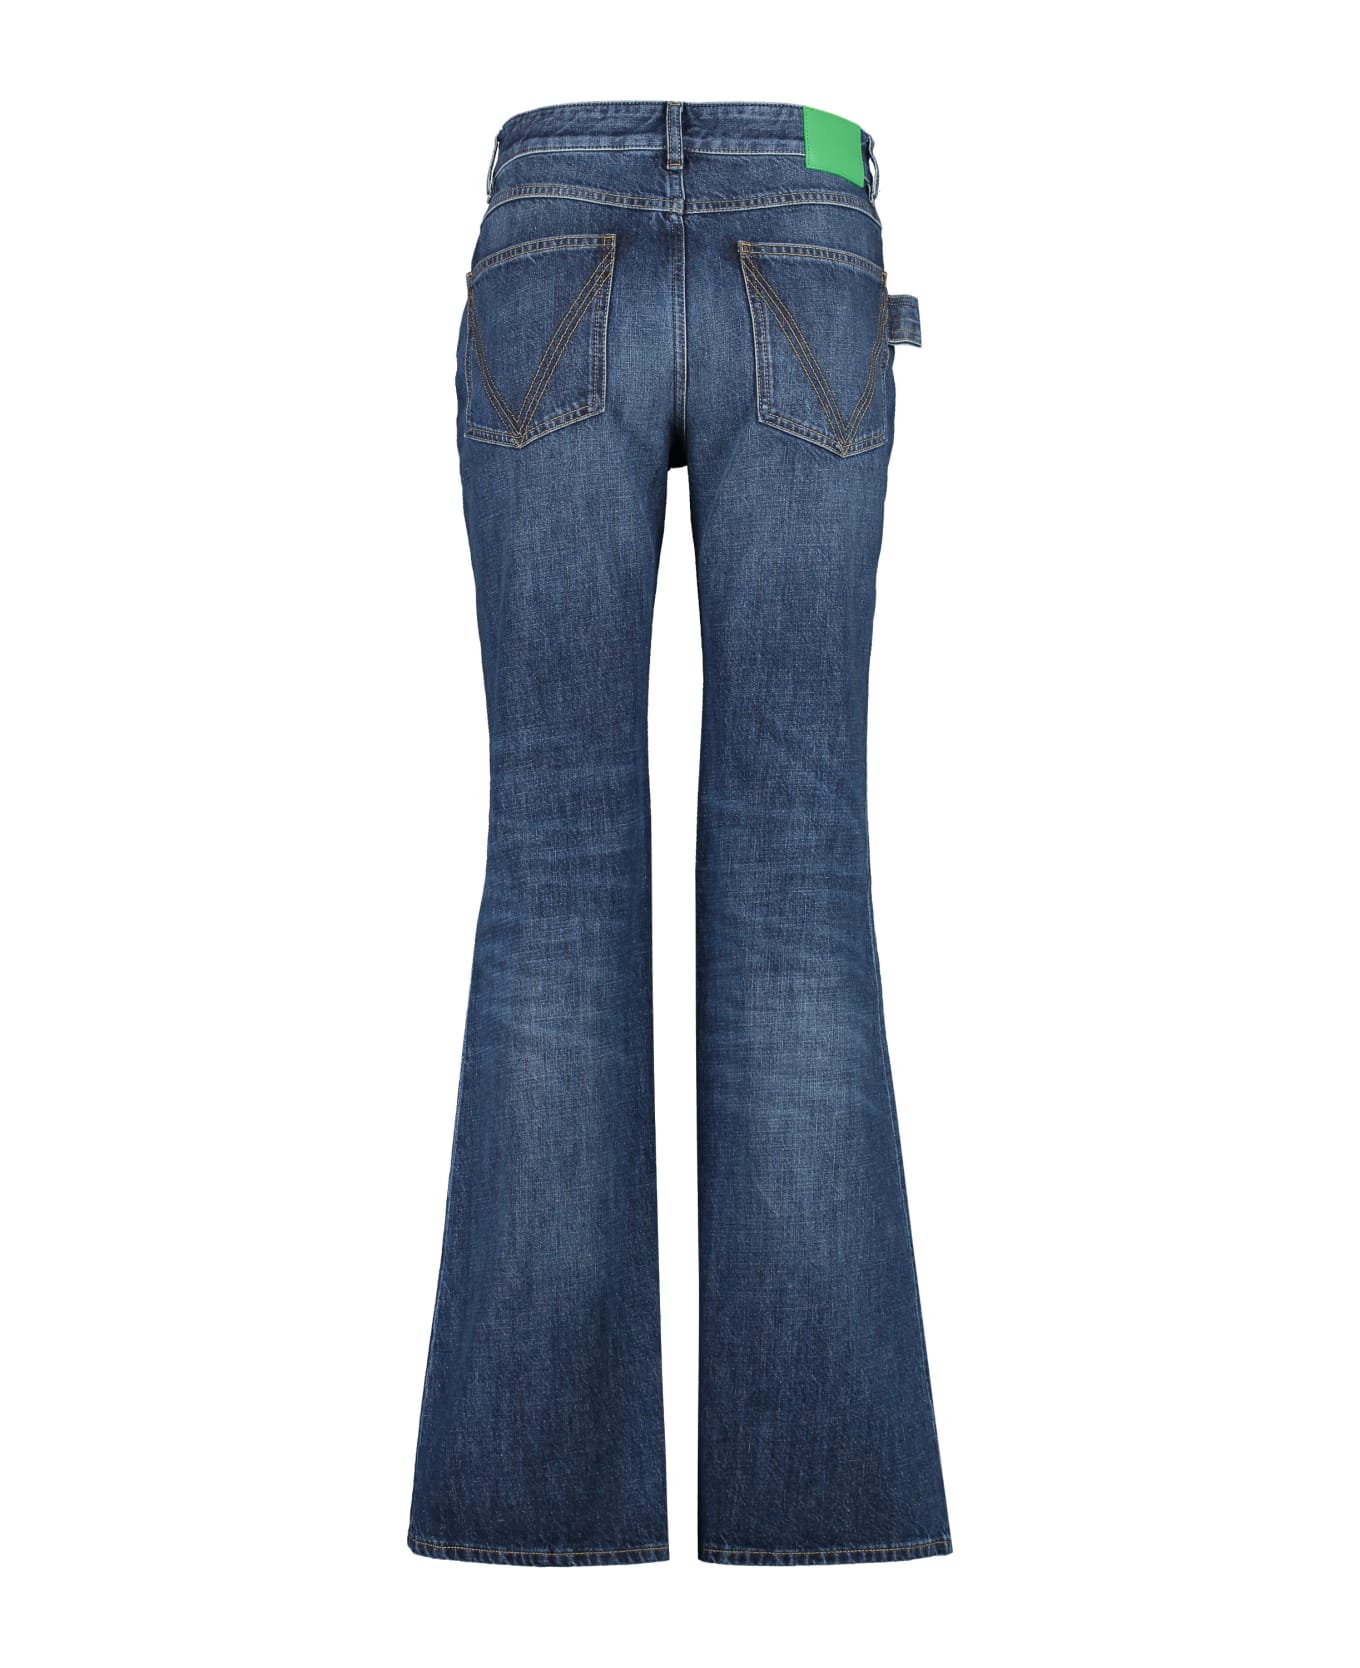 Bottega Veneta 5-pocket Jeans - Mid Blue